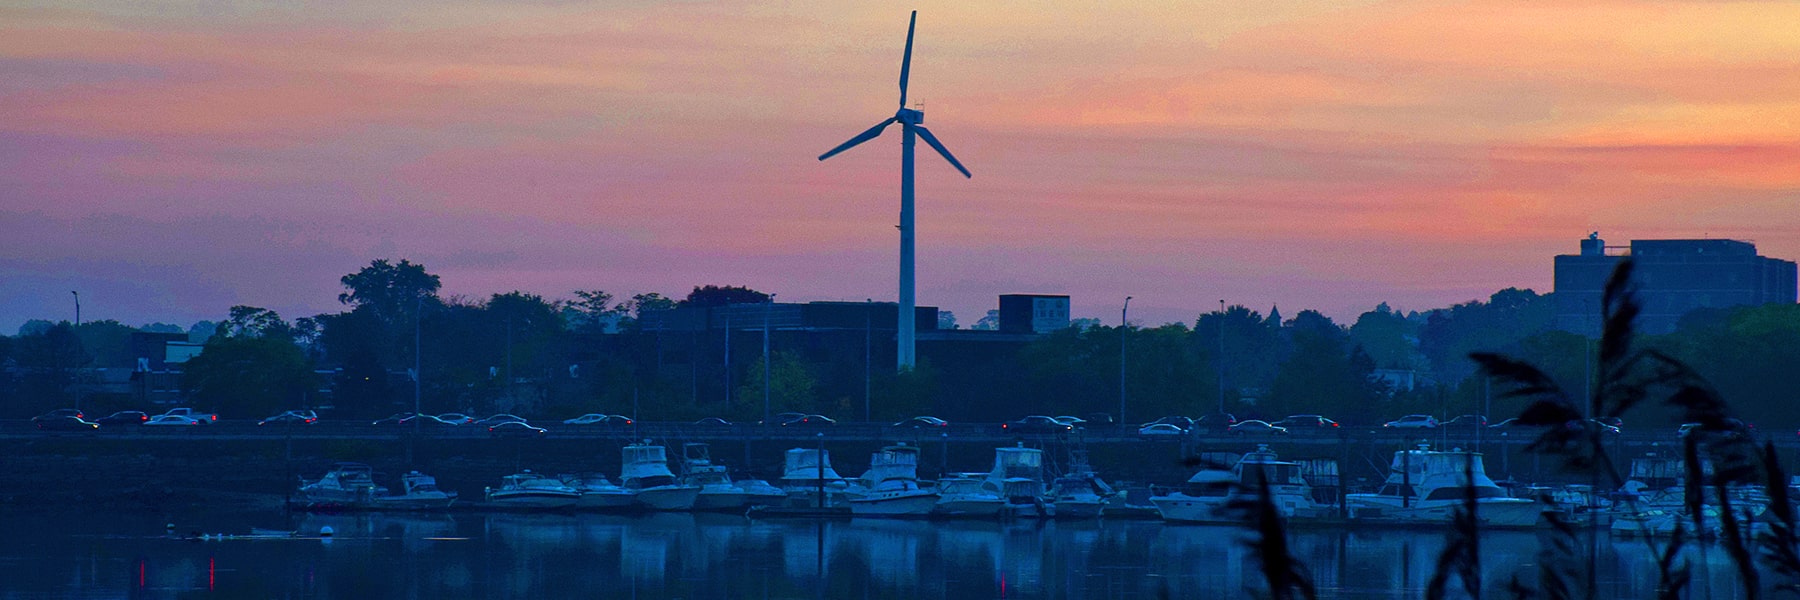 Wind turbine in Boston.